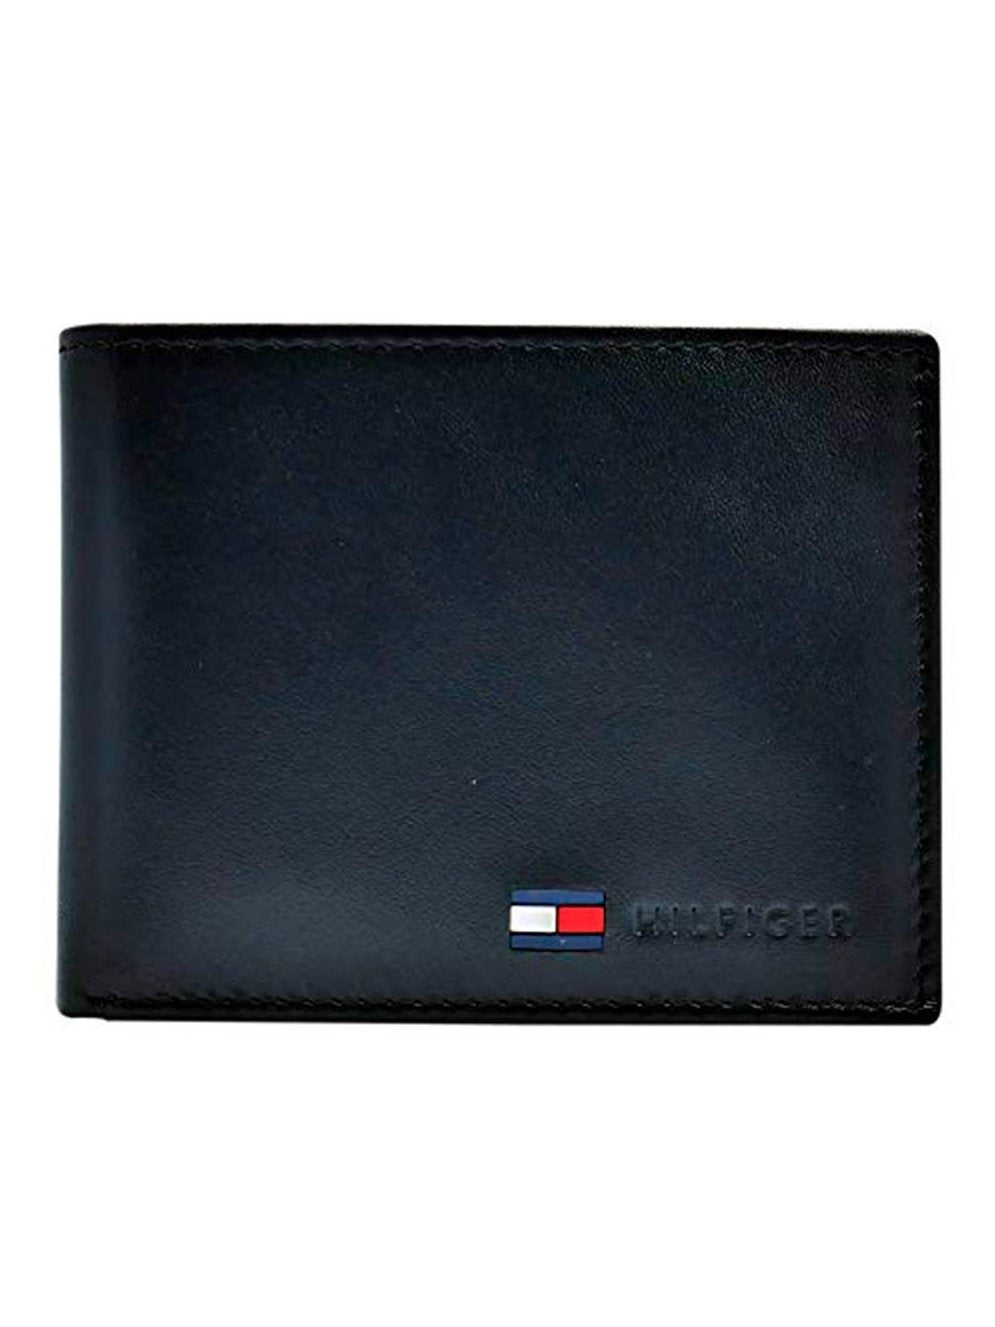 Tommy Hilfiger Mens Genuine Leather Credit Card Passcase Wallet Black 31TL22X060.